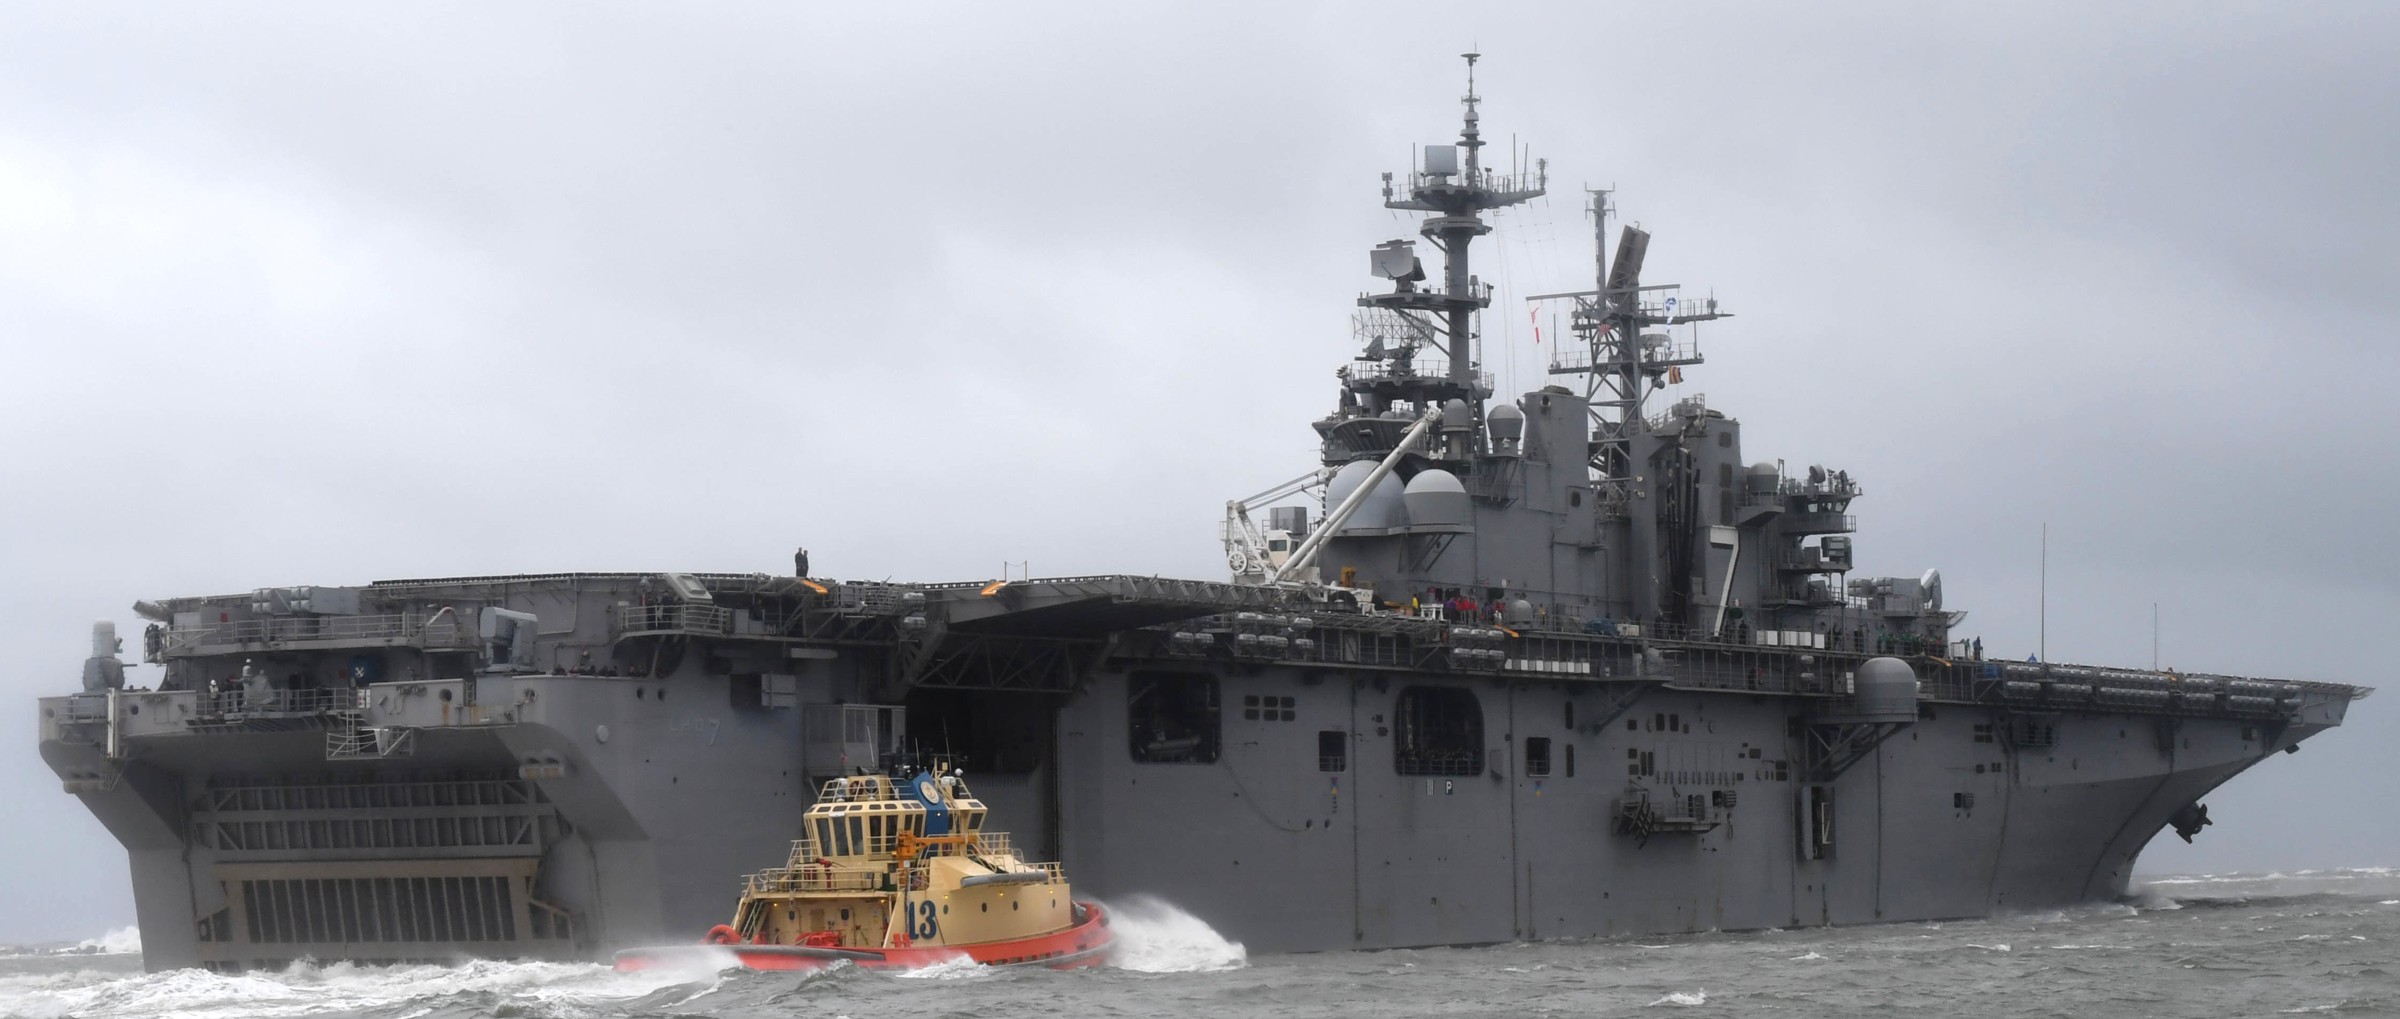 lhd-7 uss iwo jima wasp class amphibious assault ship dock landing helicopter us navy mayport hurricane matthew 131